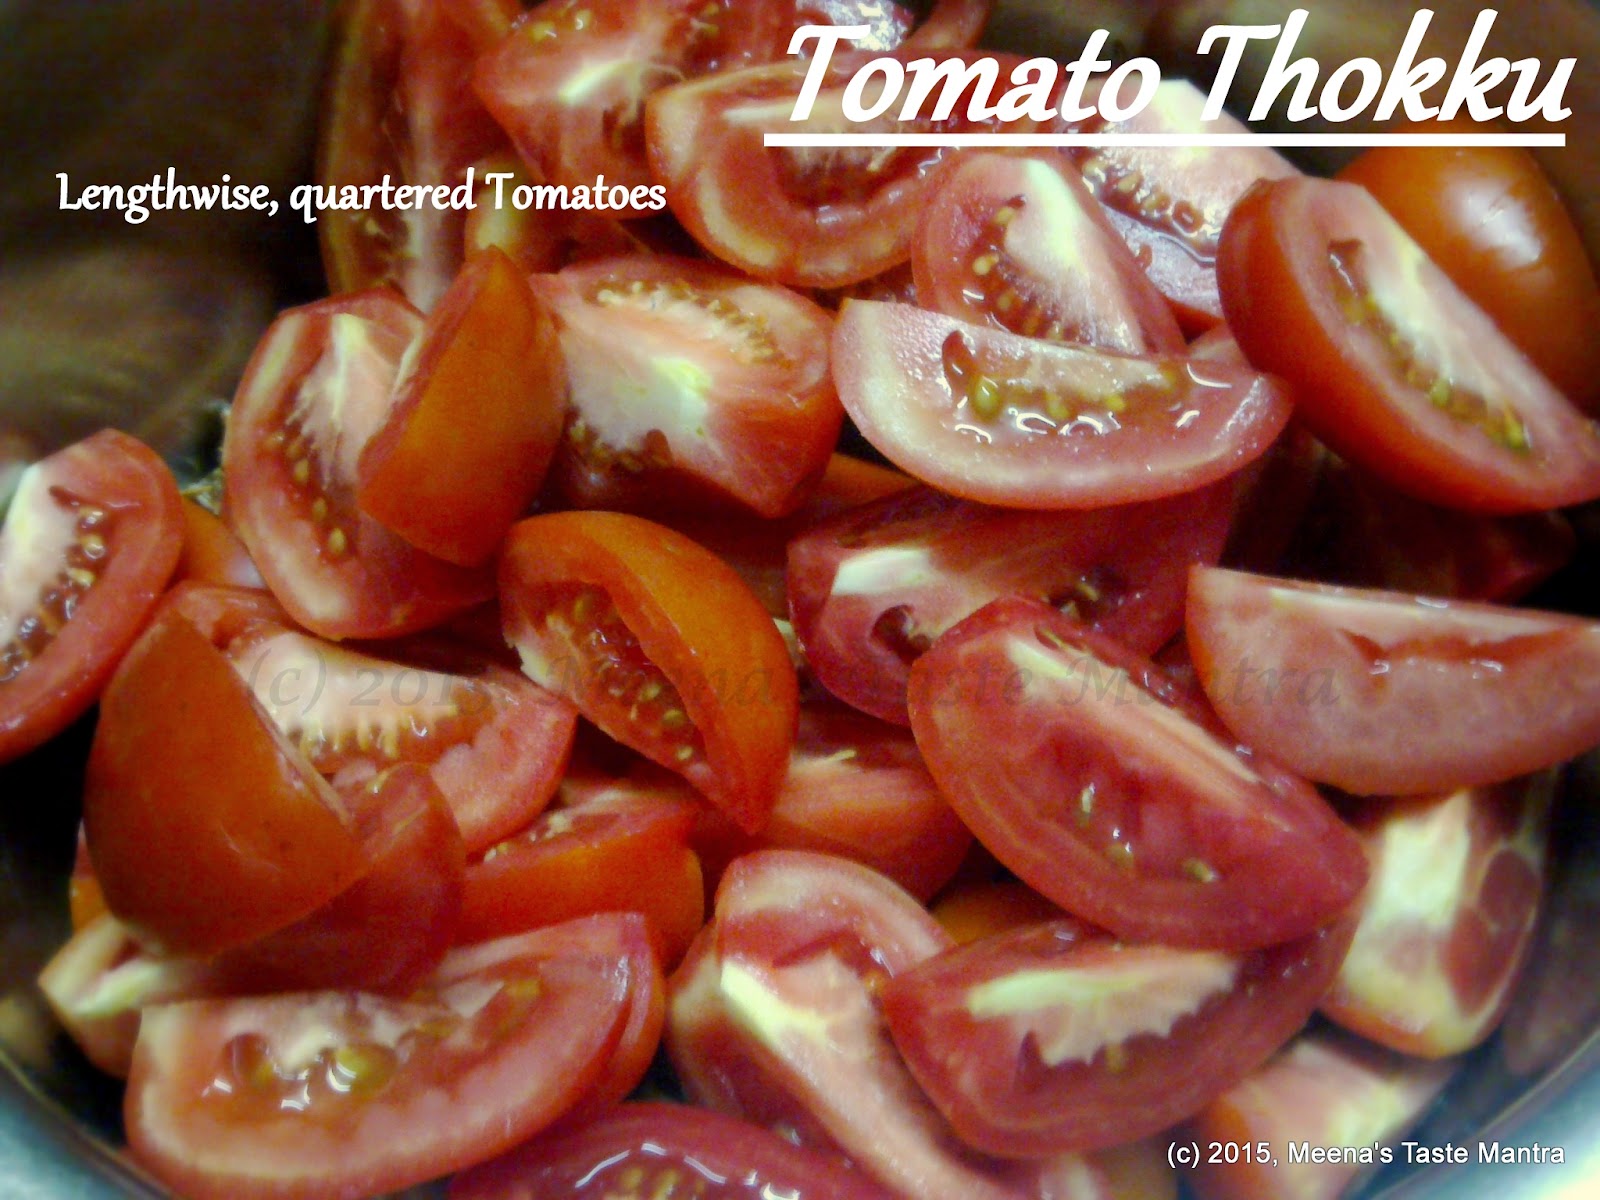 Tomato Thokku - Tomatoes quartered